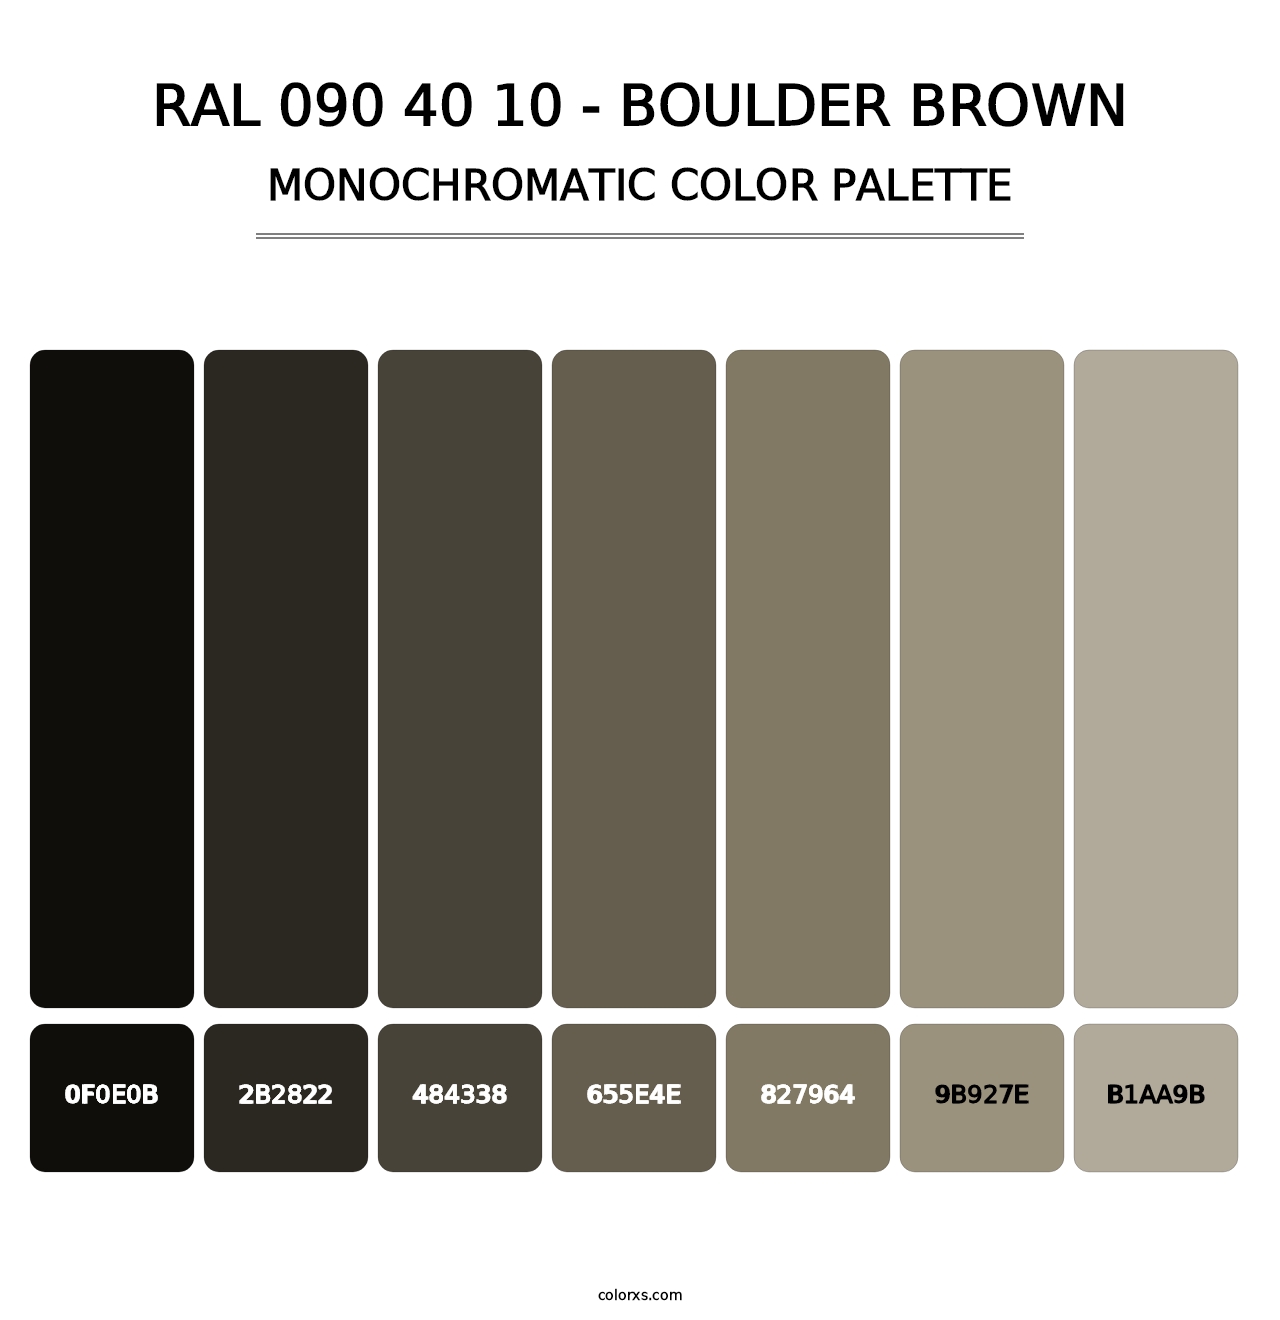 RAL 090 40 10 - Boulder Brown - Monochromatic Color Palette